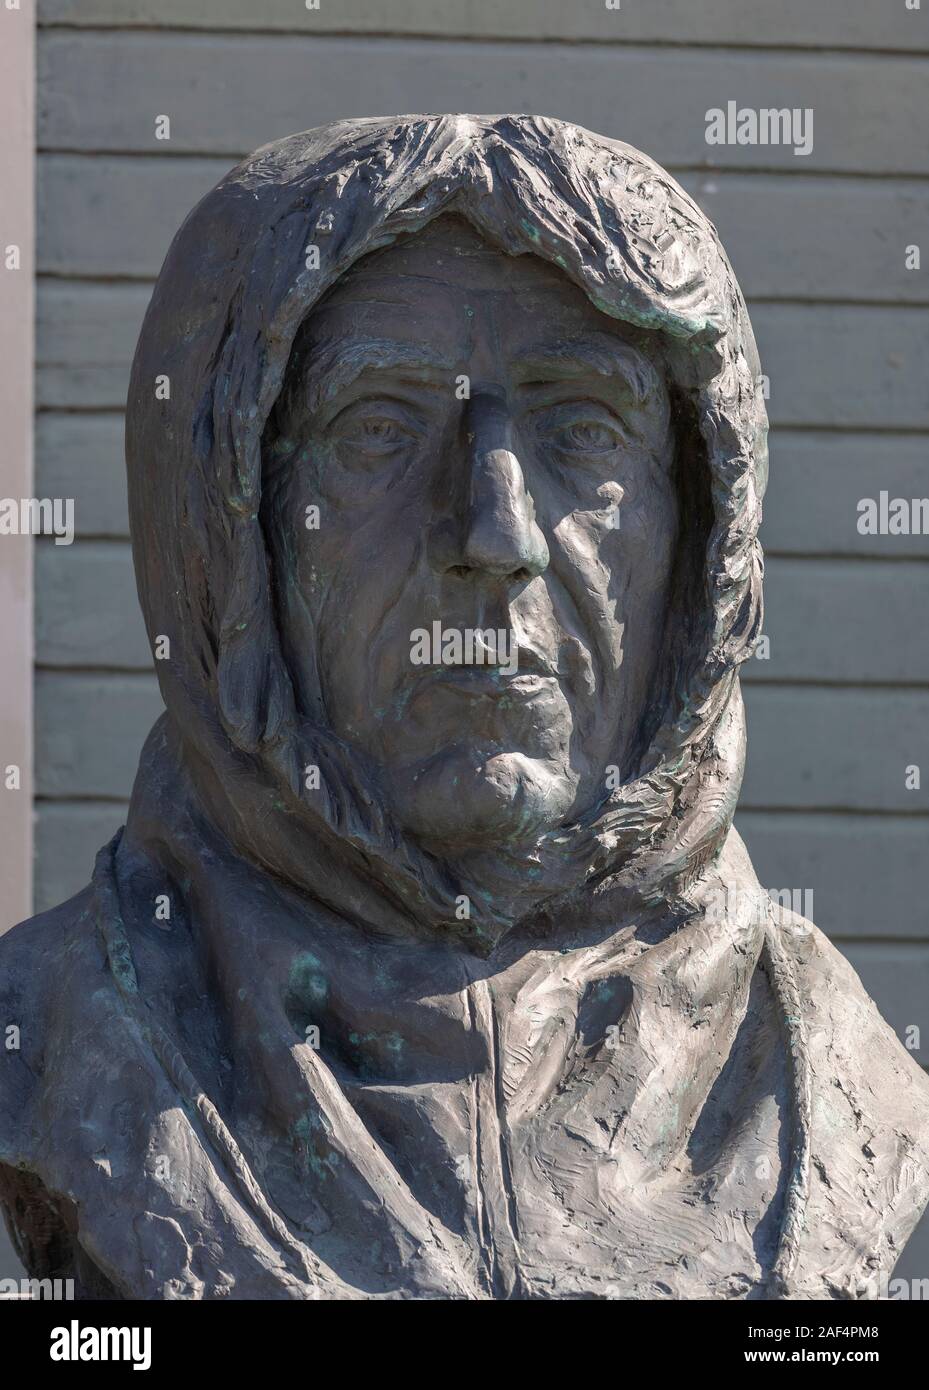 TROMSØ, Norvegia - Statua di esploratore polare Roald Amundsen, al museo polare. Foto Stock